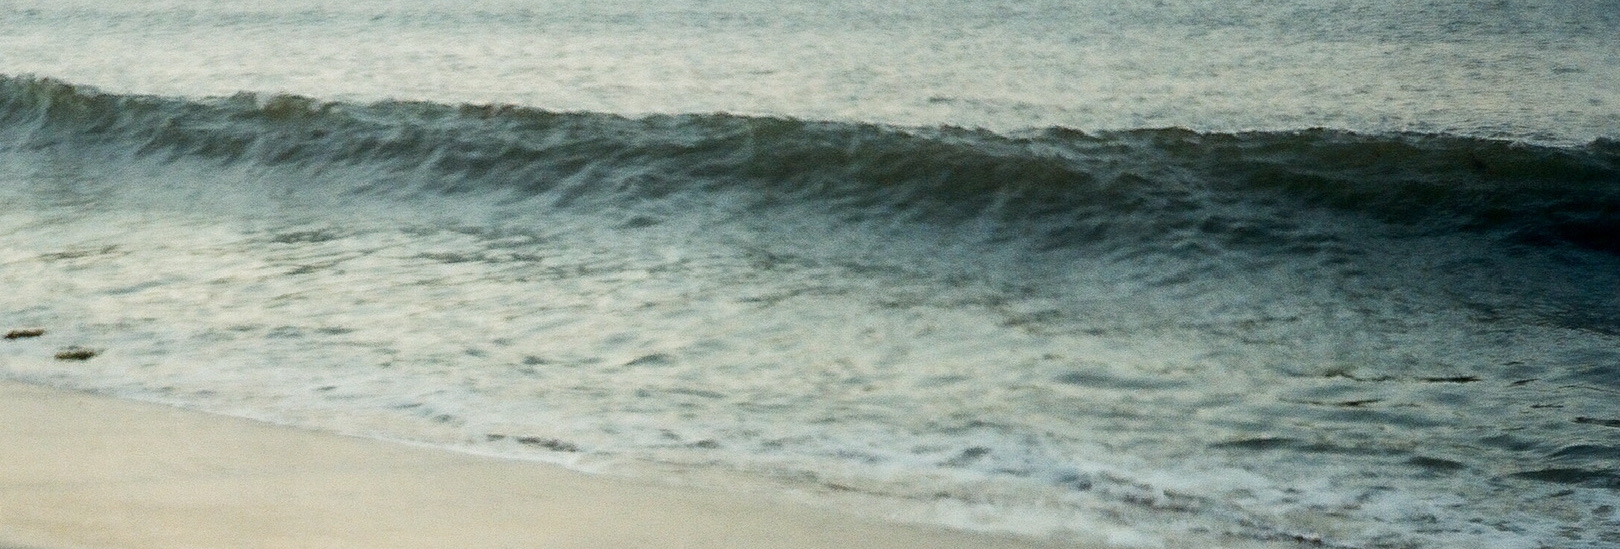 Ocean Banner